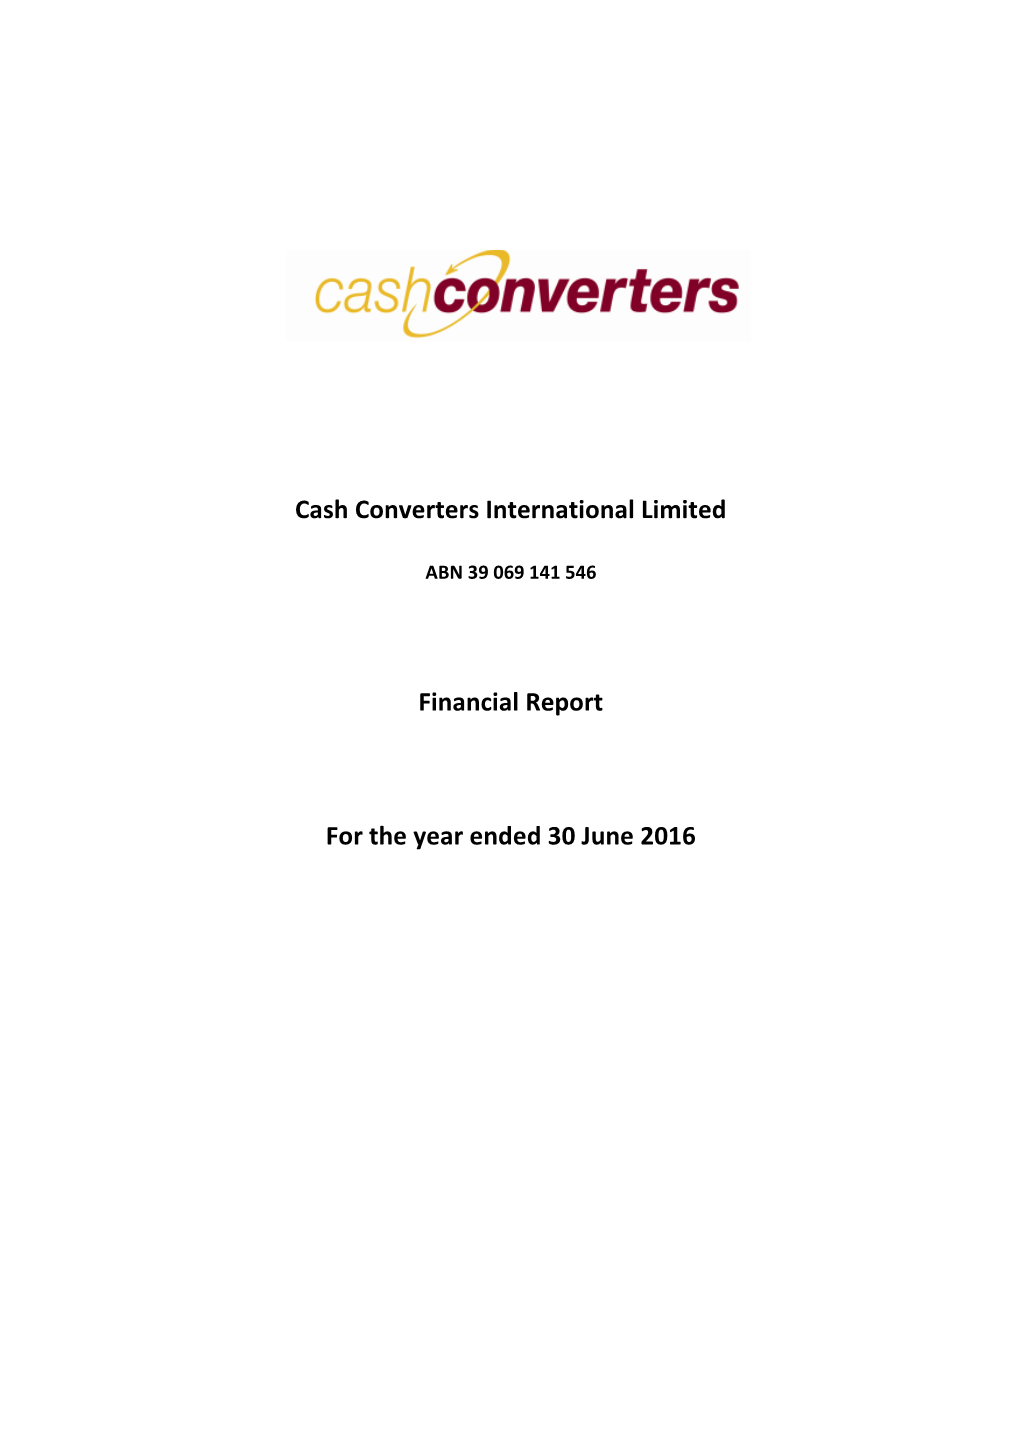 Cash Converters International Limited Financial